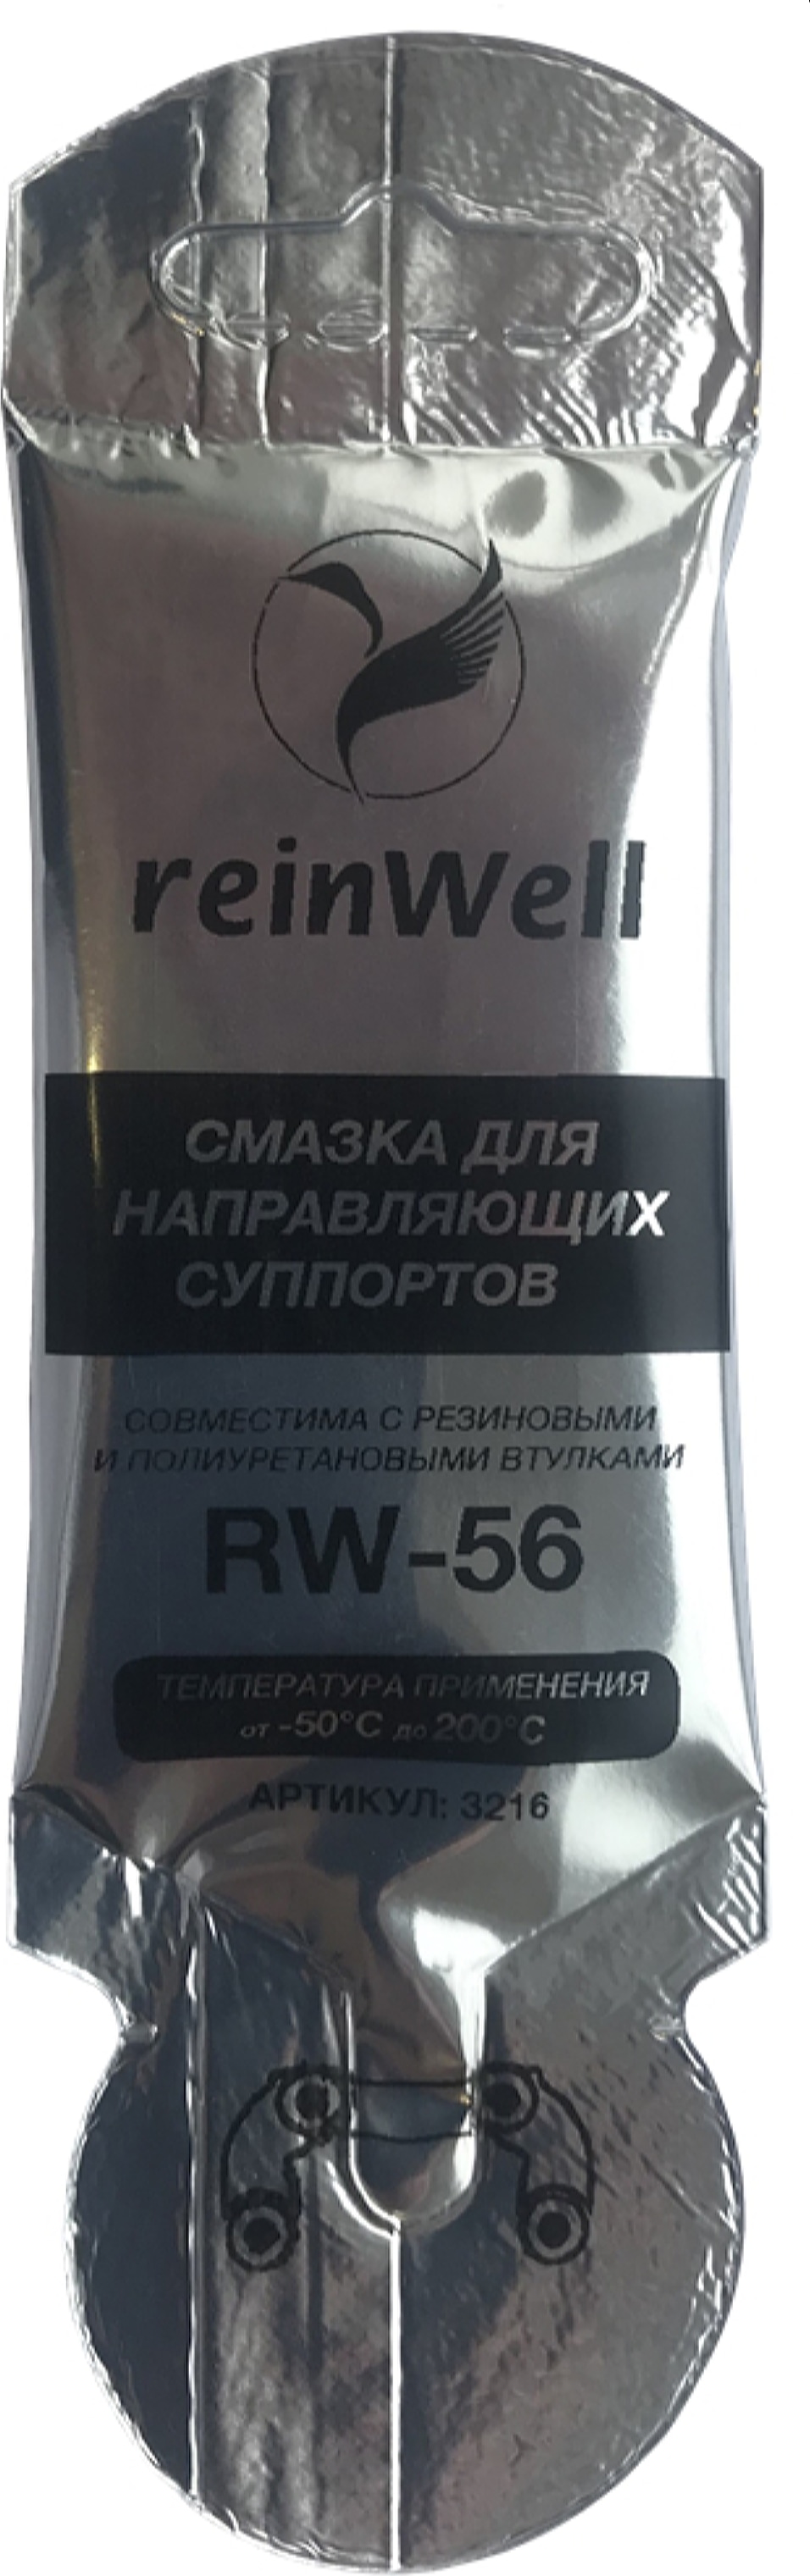 REINWELL 3216 Смазка reinwell 0.005л.